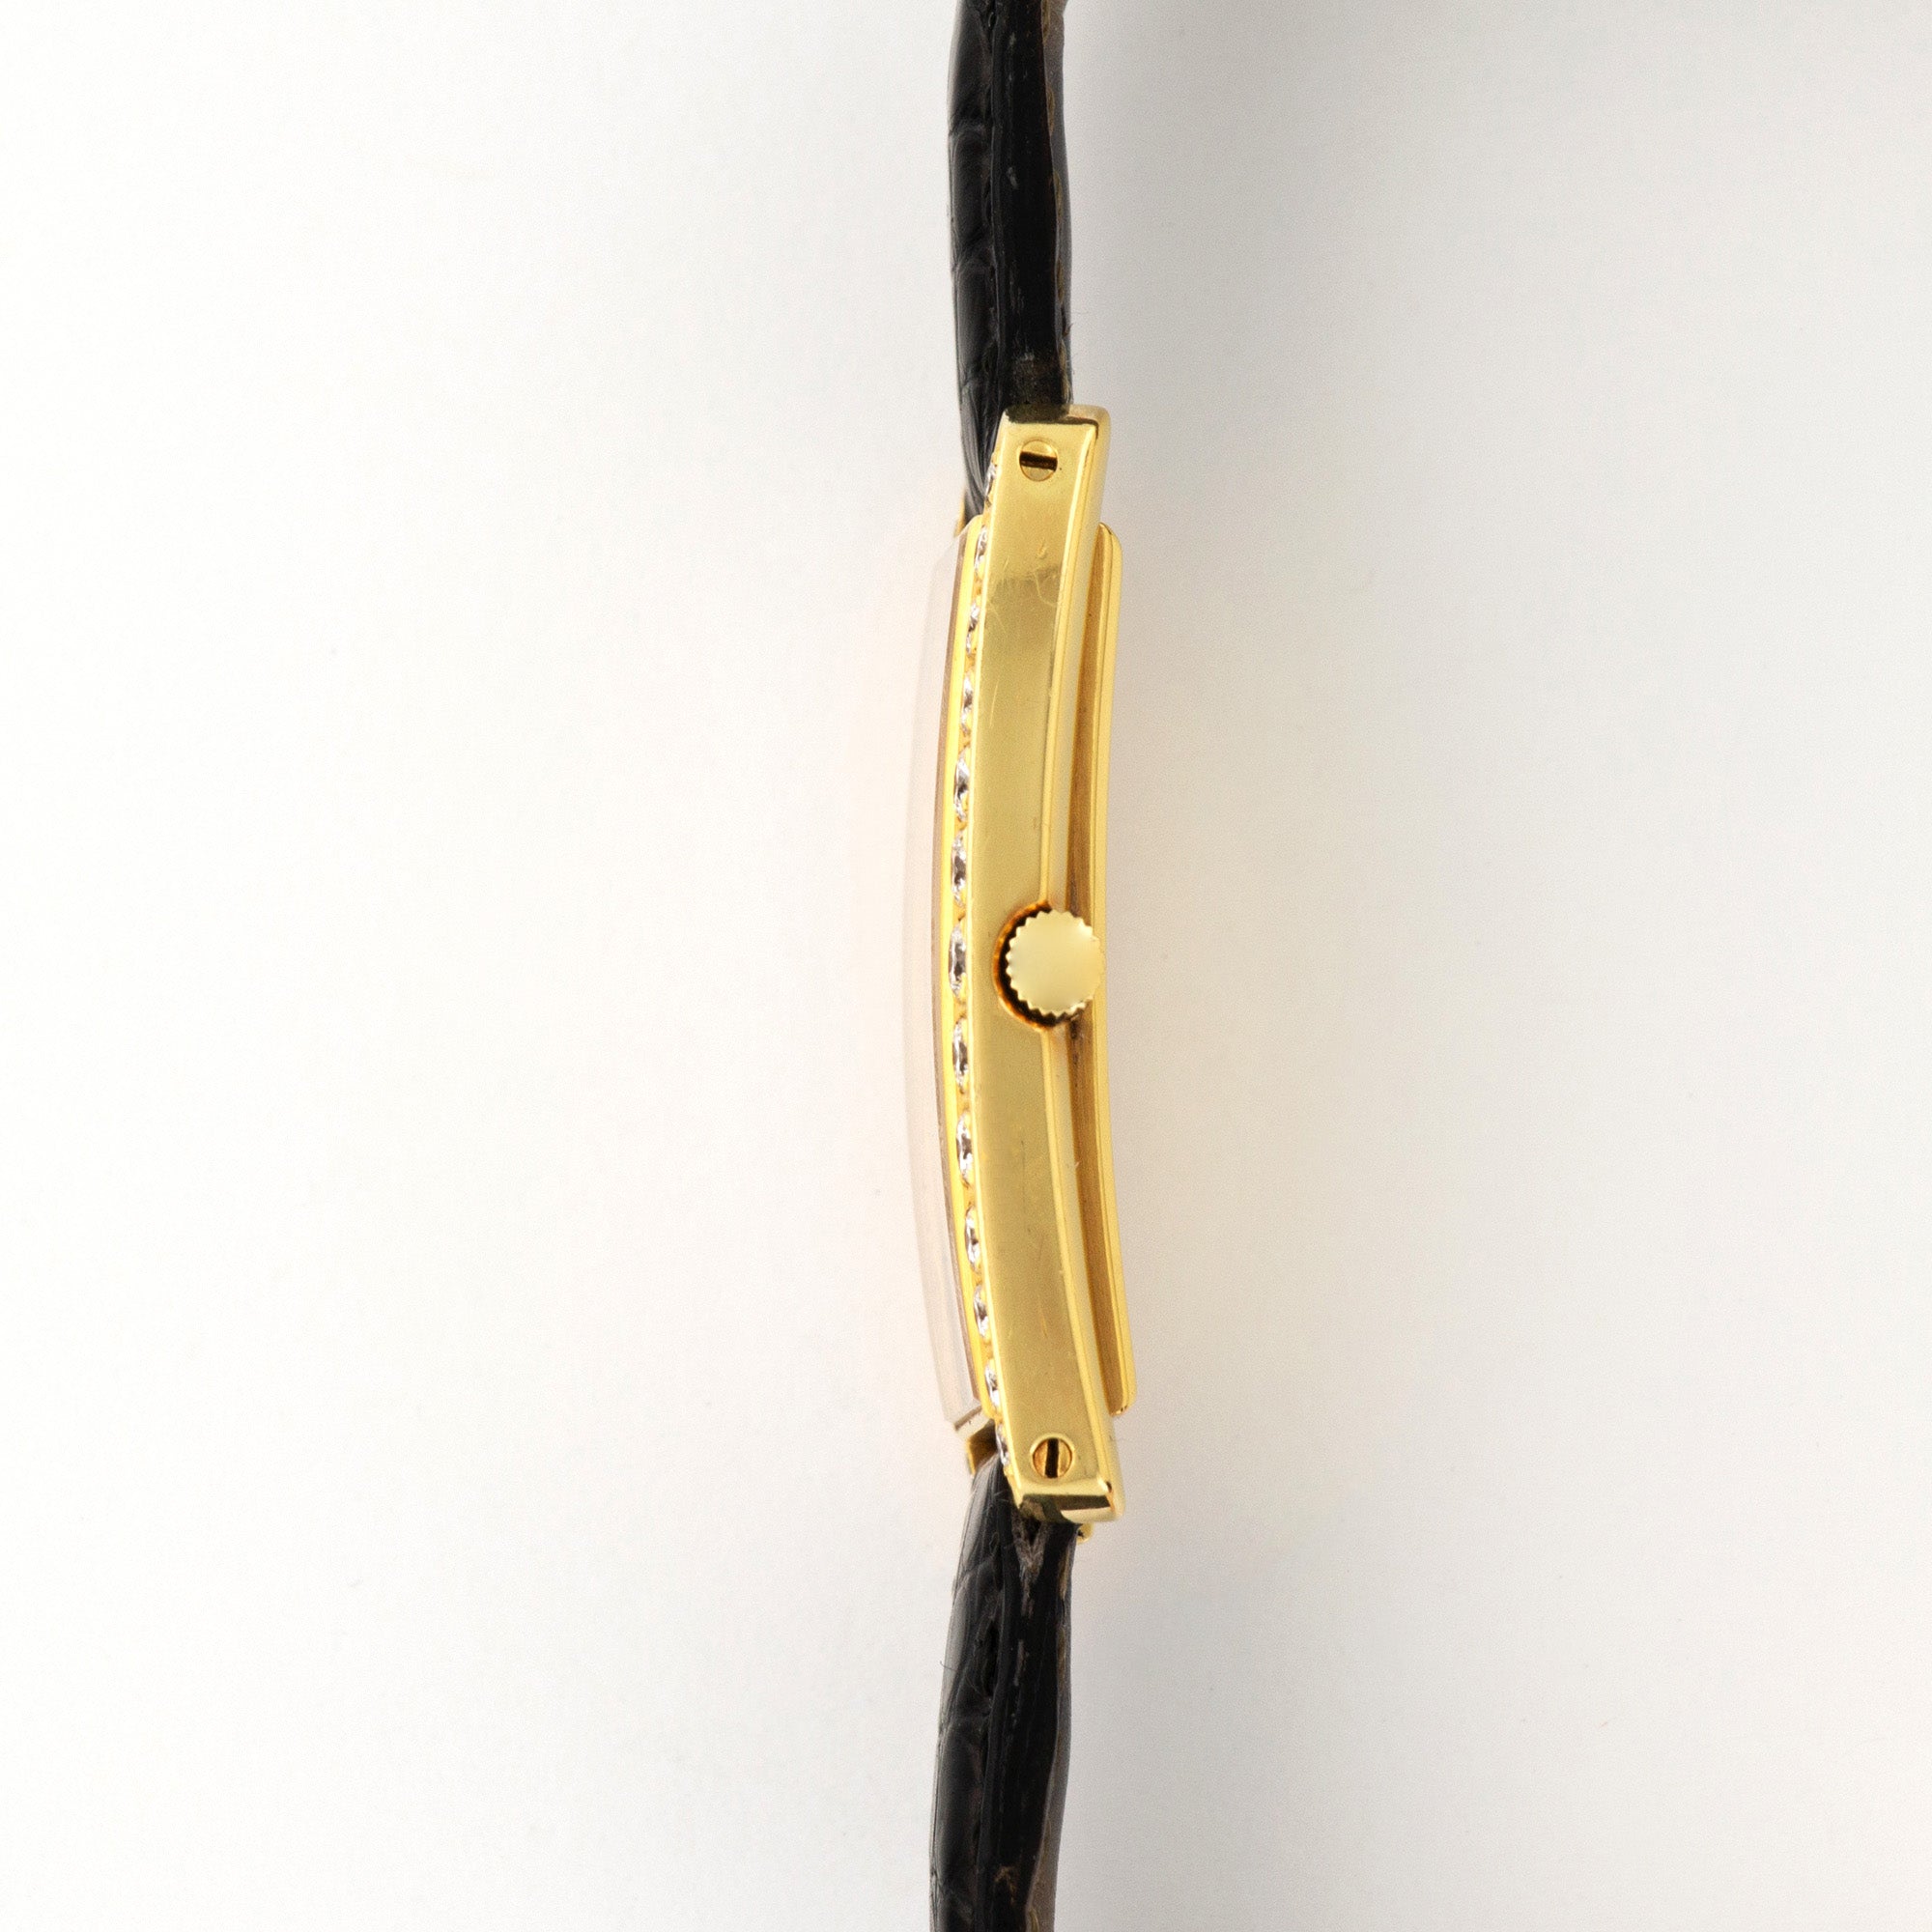 Cartier - Cartier Yellow Gold Tank Diamond Watch - The Keystone Watches